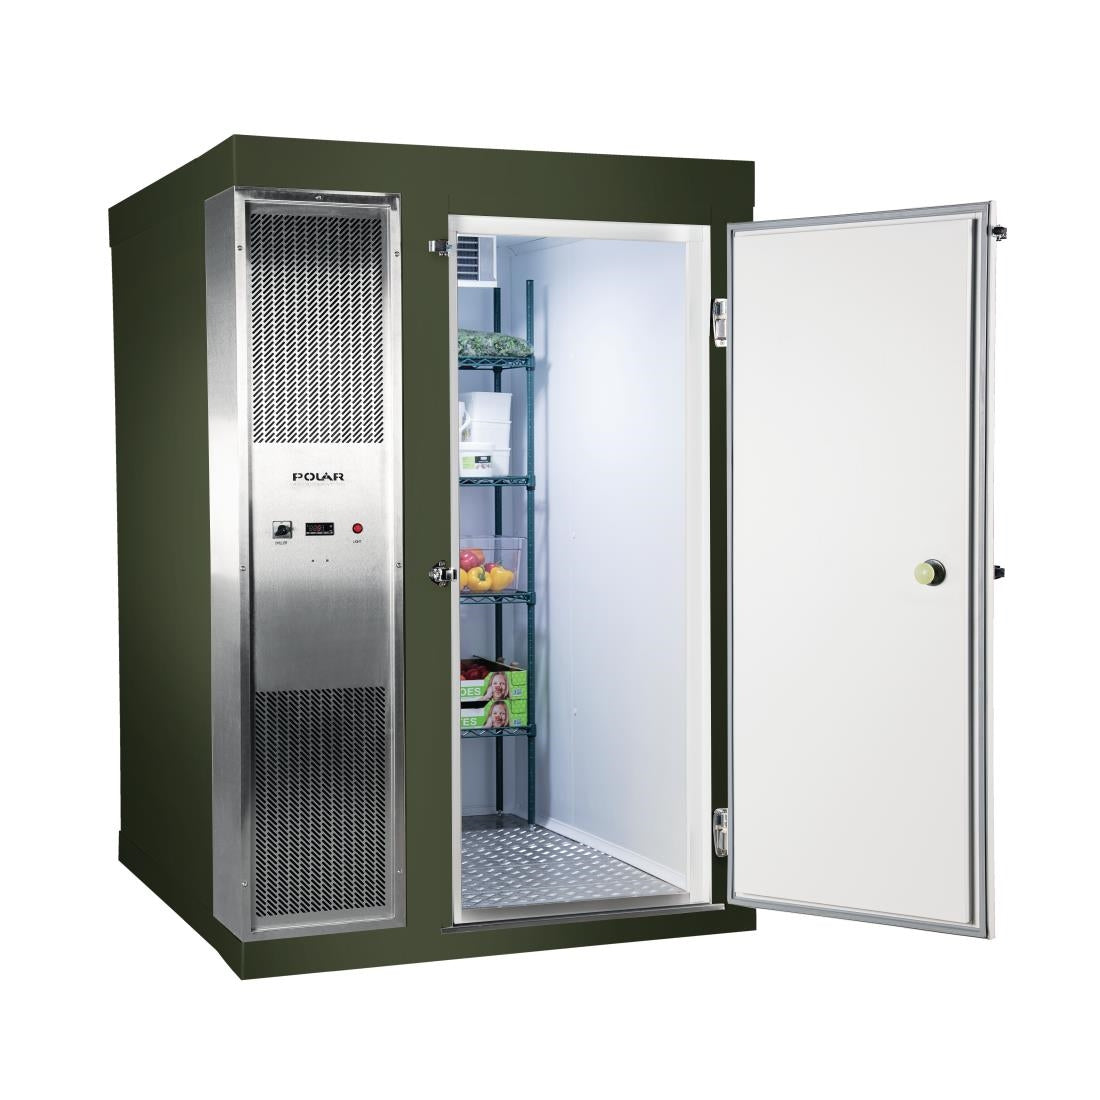 DS483-CGN Polar U-Series 1.5 x 2.1m Integral Walk In Cold Room Green JD Catering Equipment Solutions Ltd